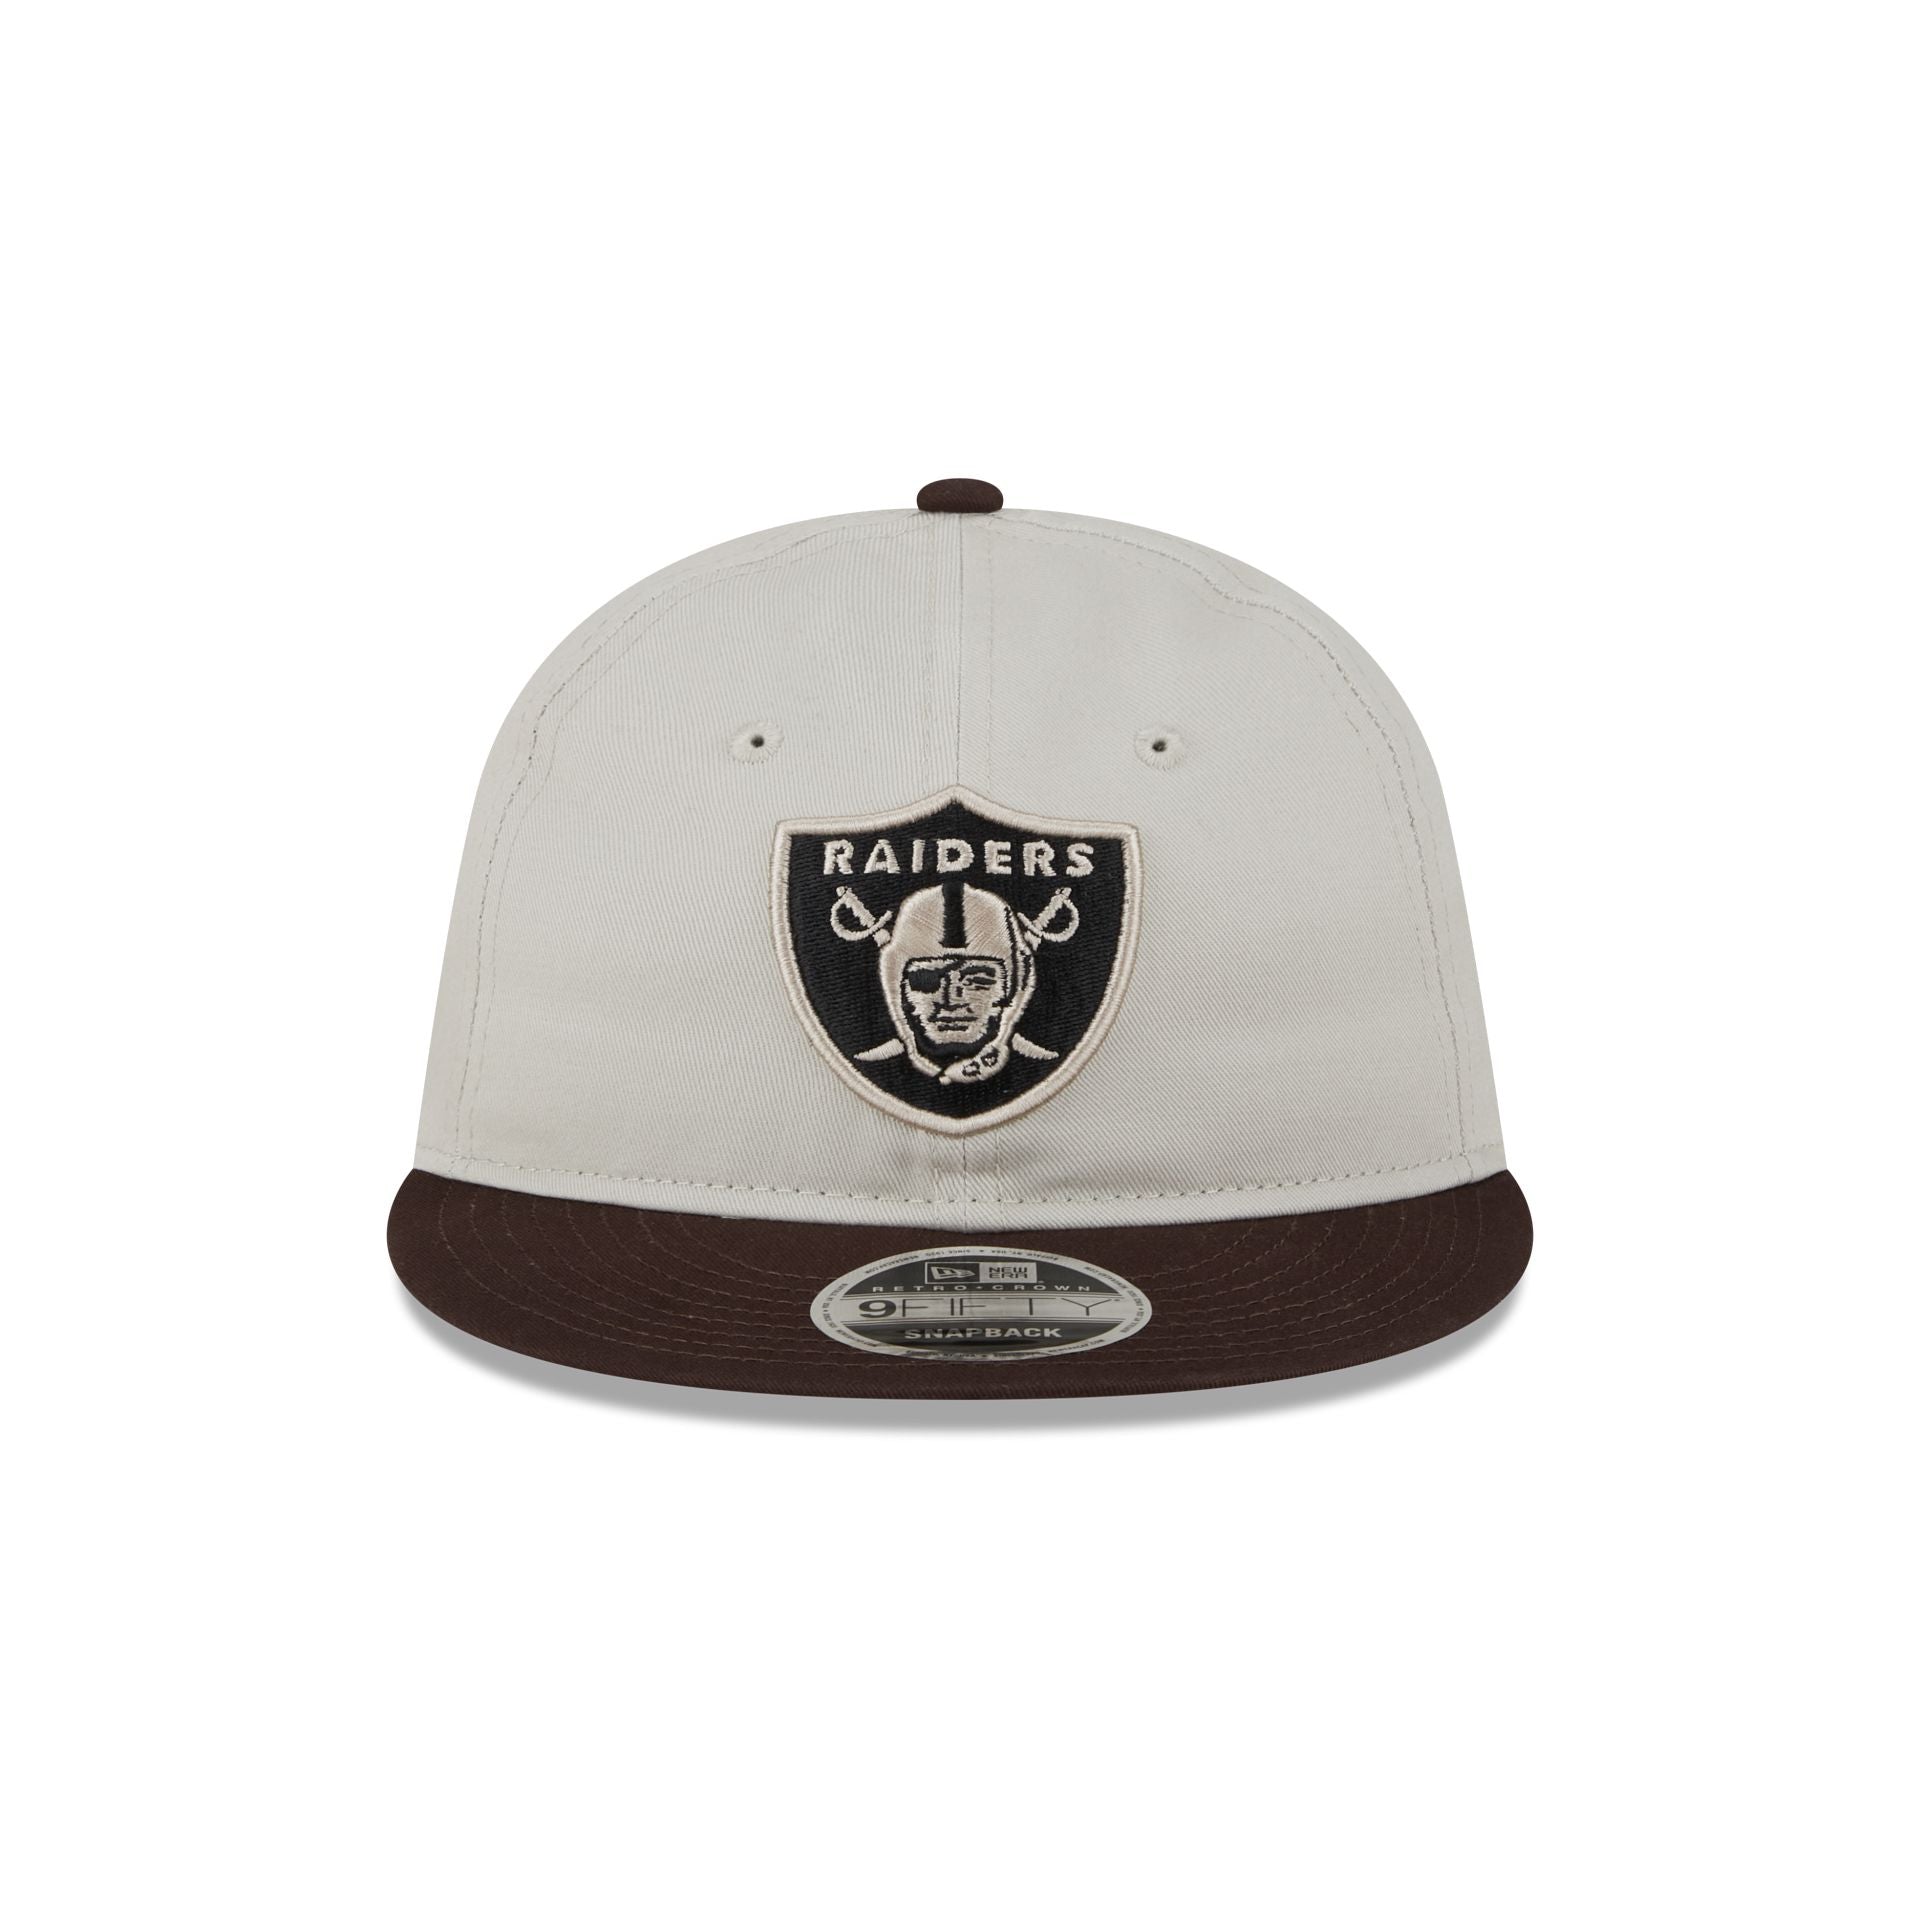 Oakland/Las Vegas Raiders snapback hat - NFL Mitchell & Ness retro